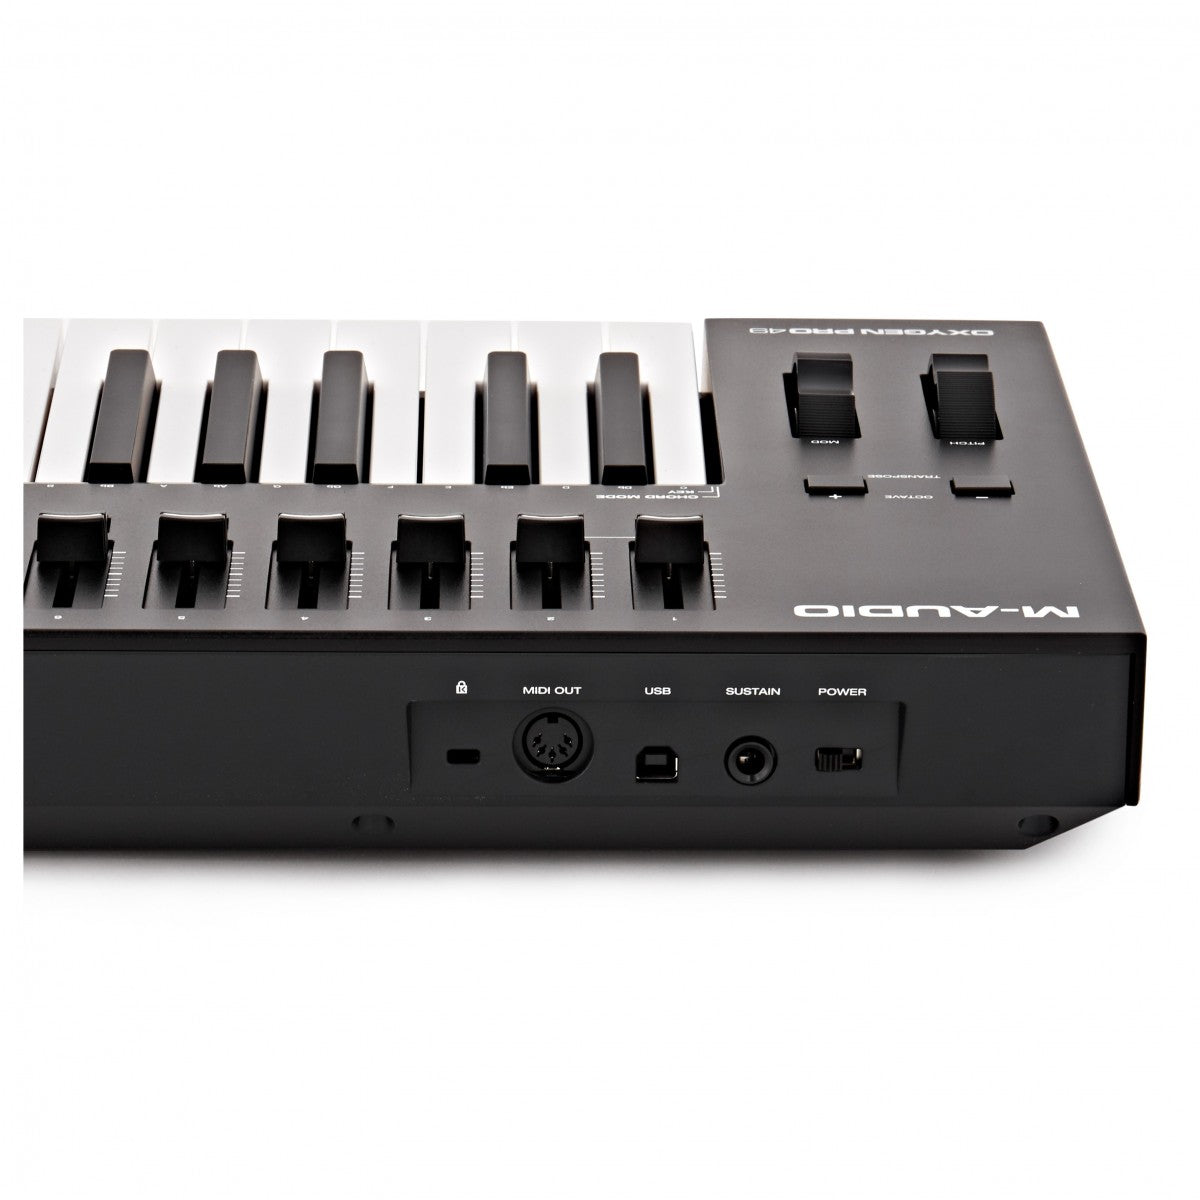 MIDI Keyboard Controller M-Audio Oxygen Pro 49